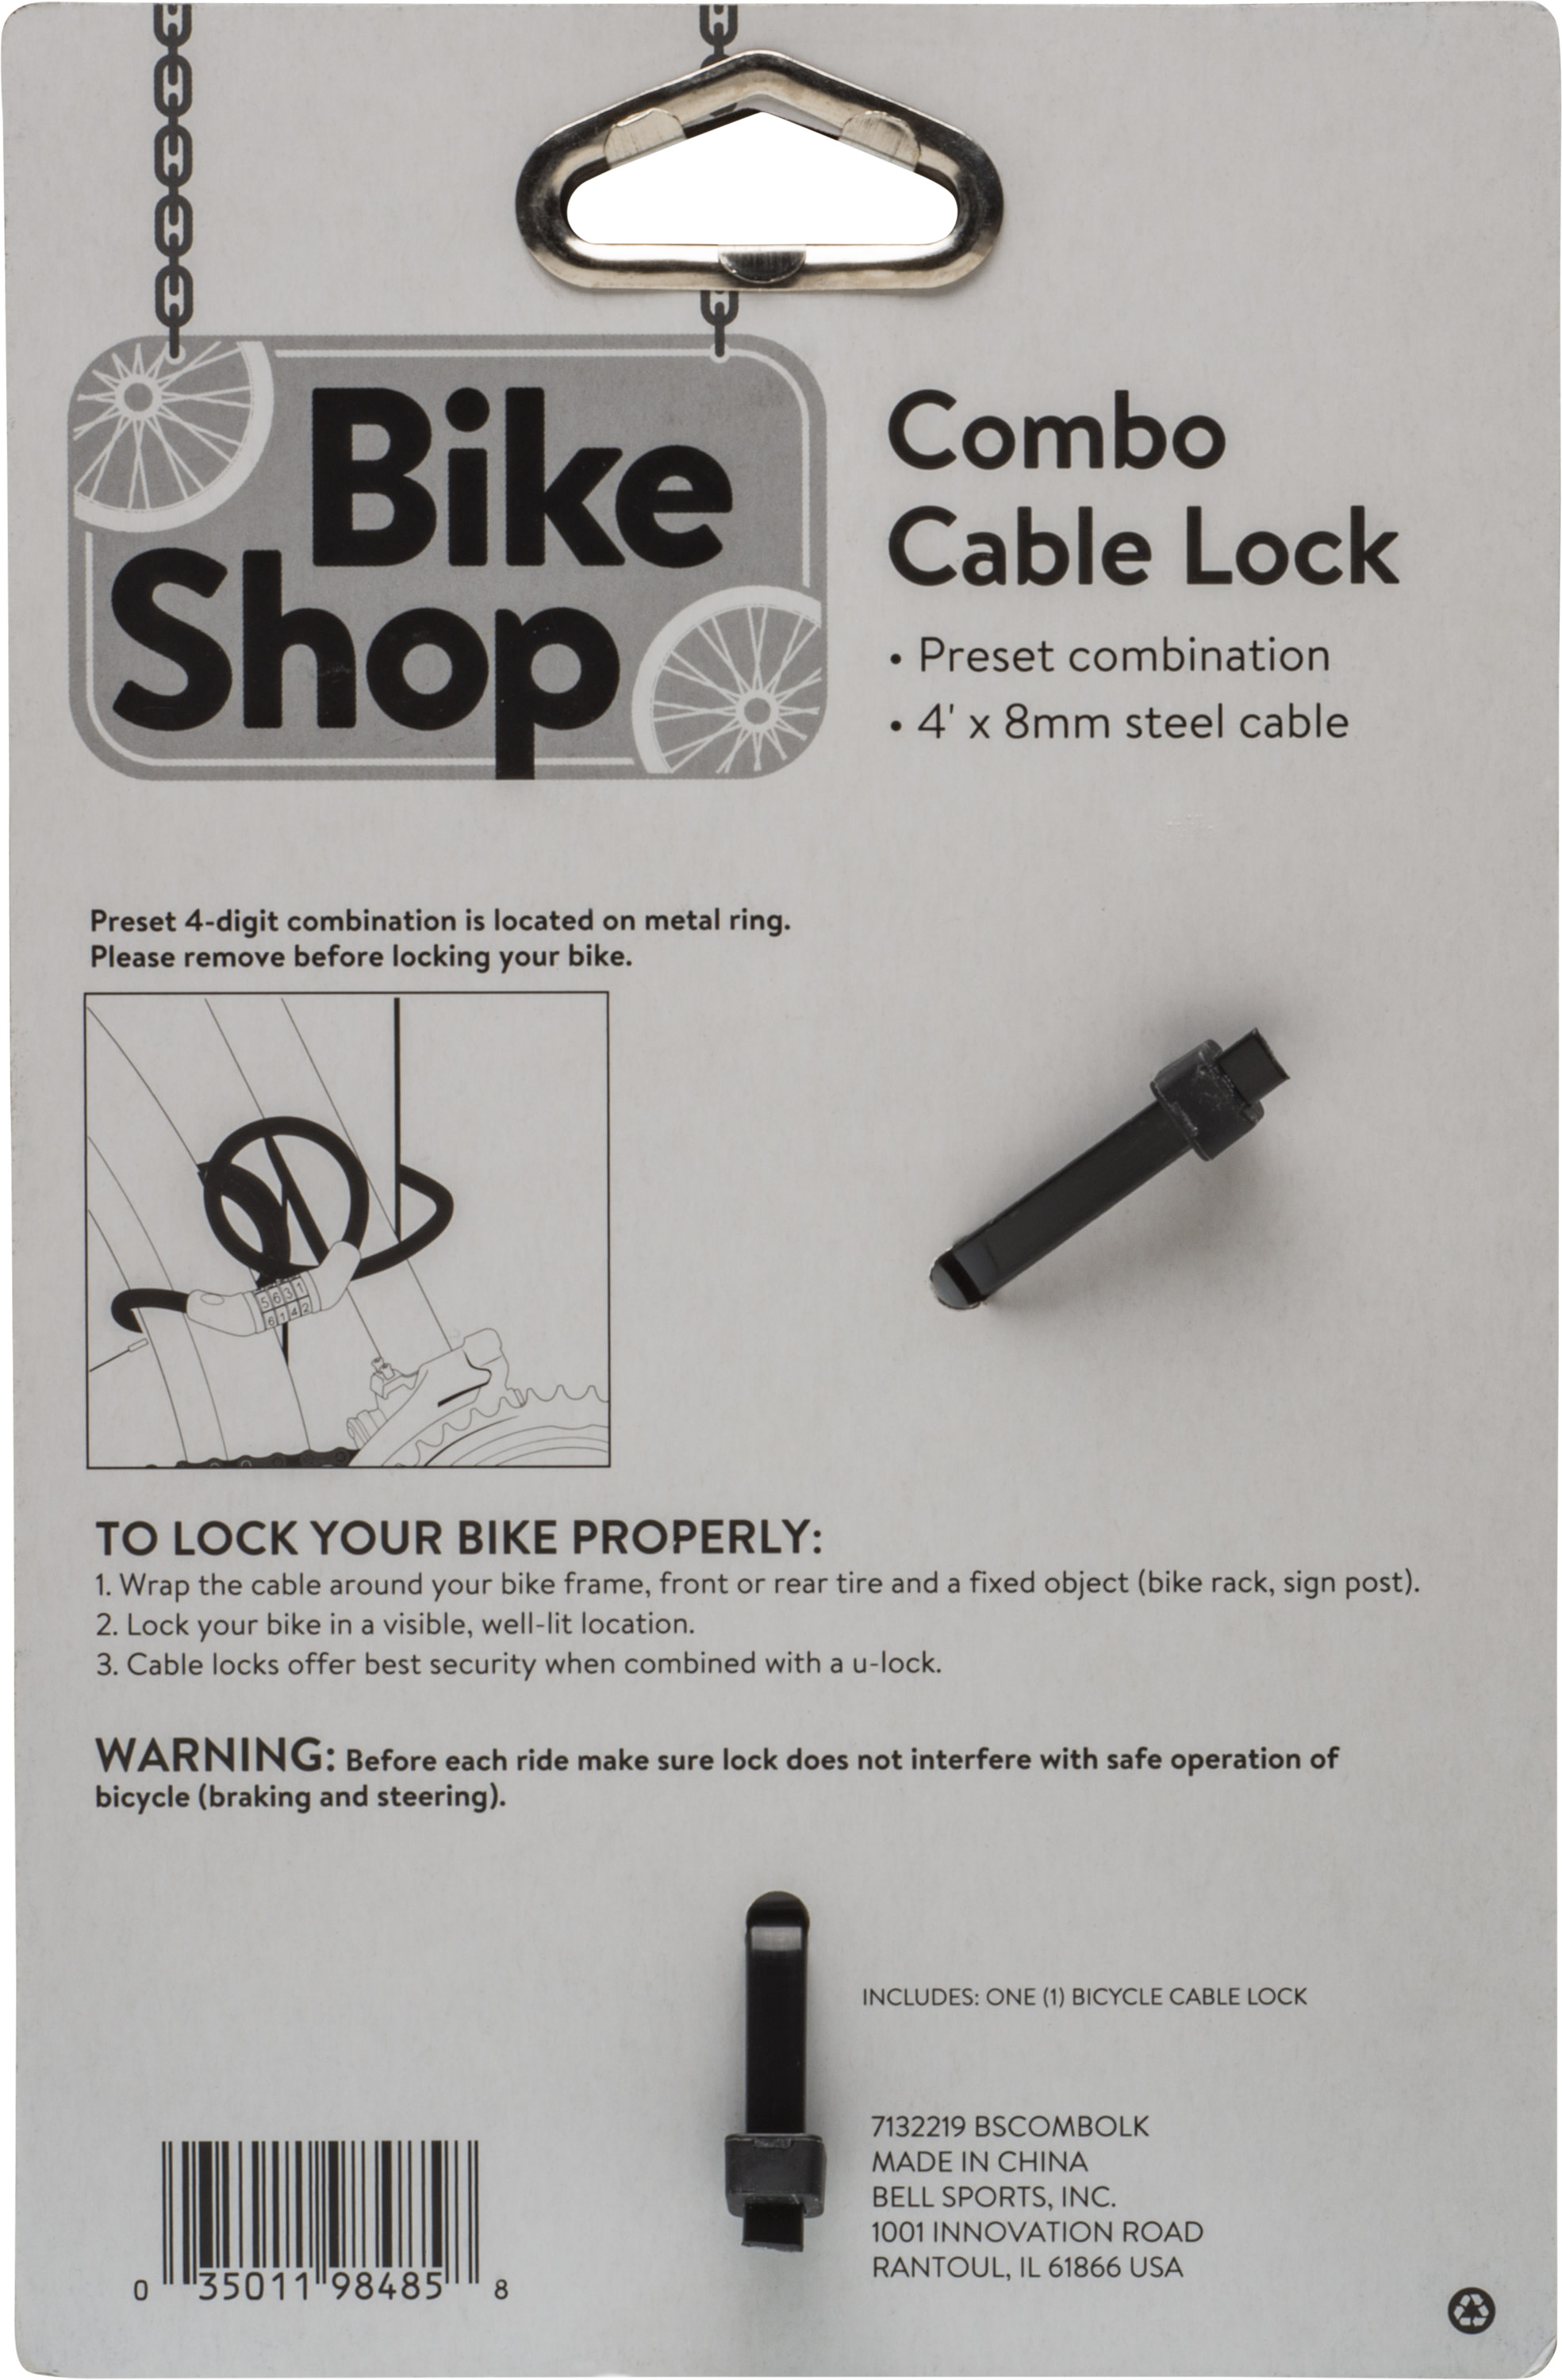 Bike Shop 4ft x 8mm Combo Cable Bike Lock - image 5 of 5